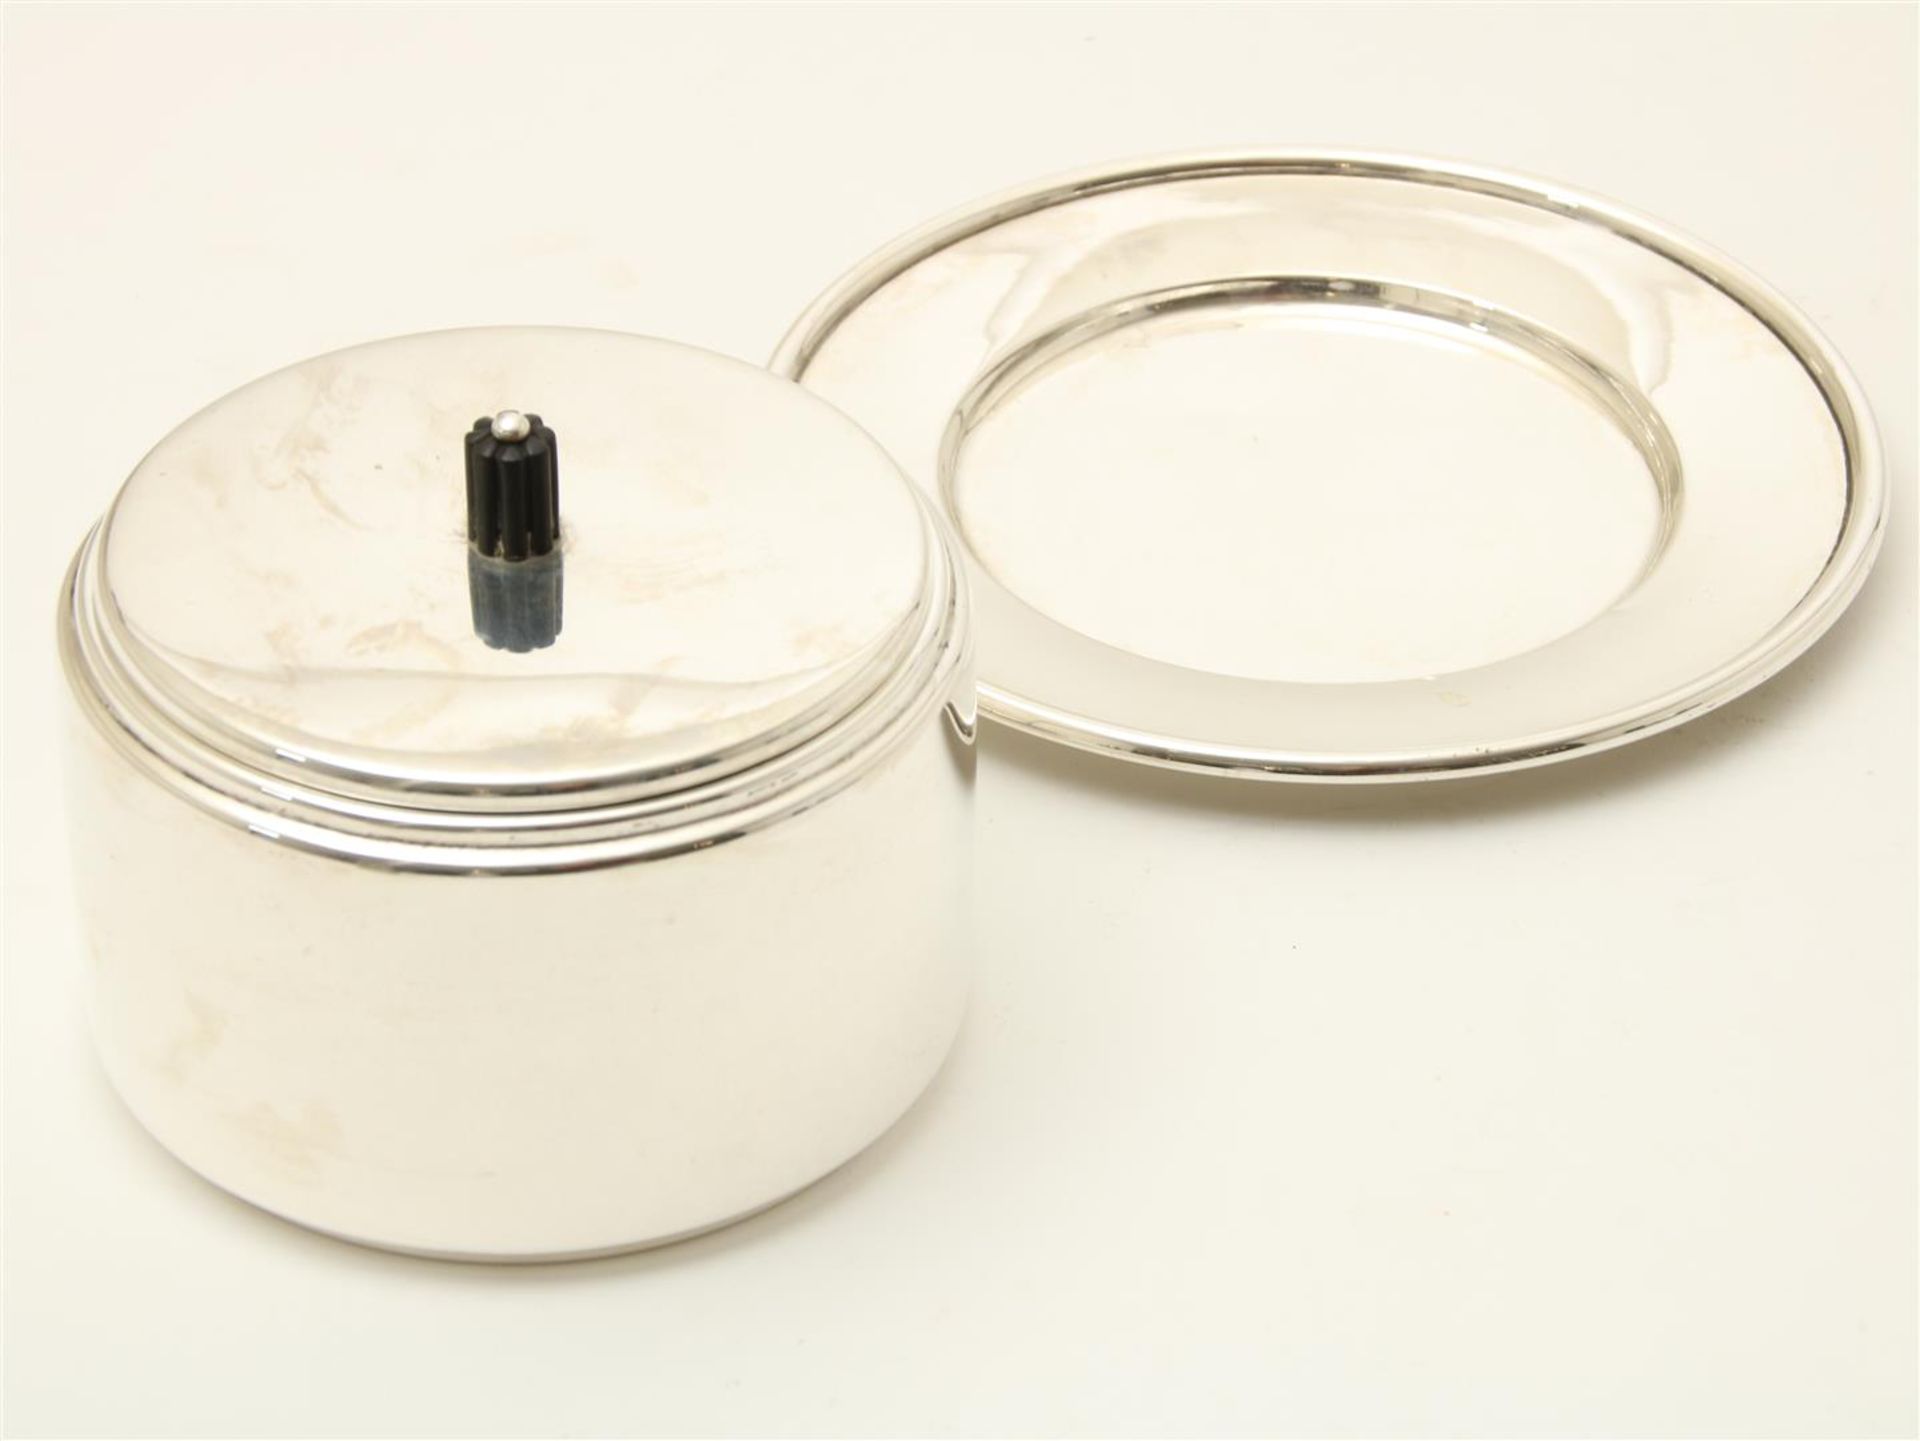 Biscuit tin with saucer, grade 835/000, designer's mark: "CE": Christa Ehrlich, maker's mark: "